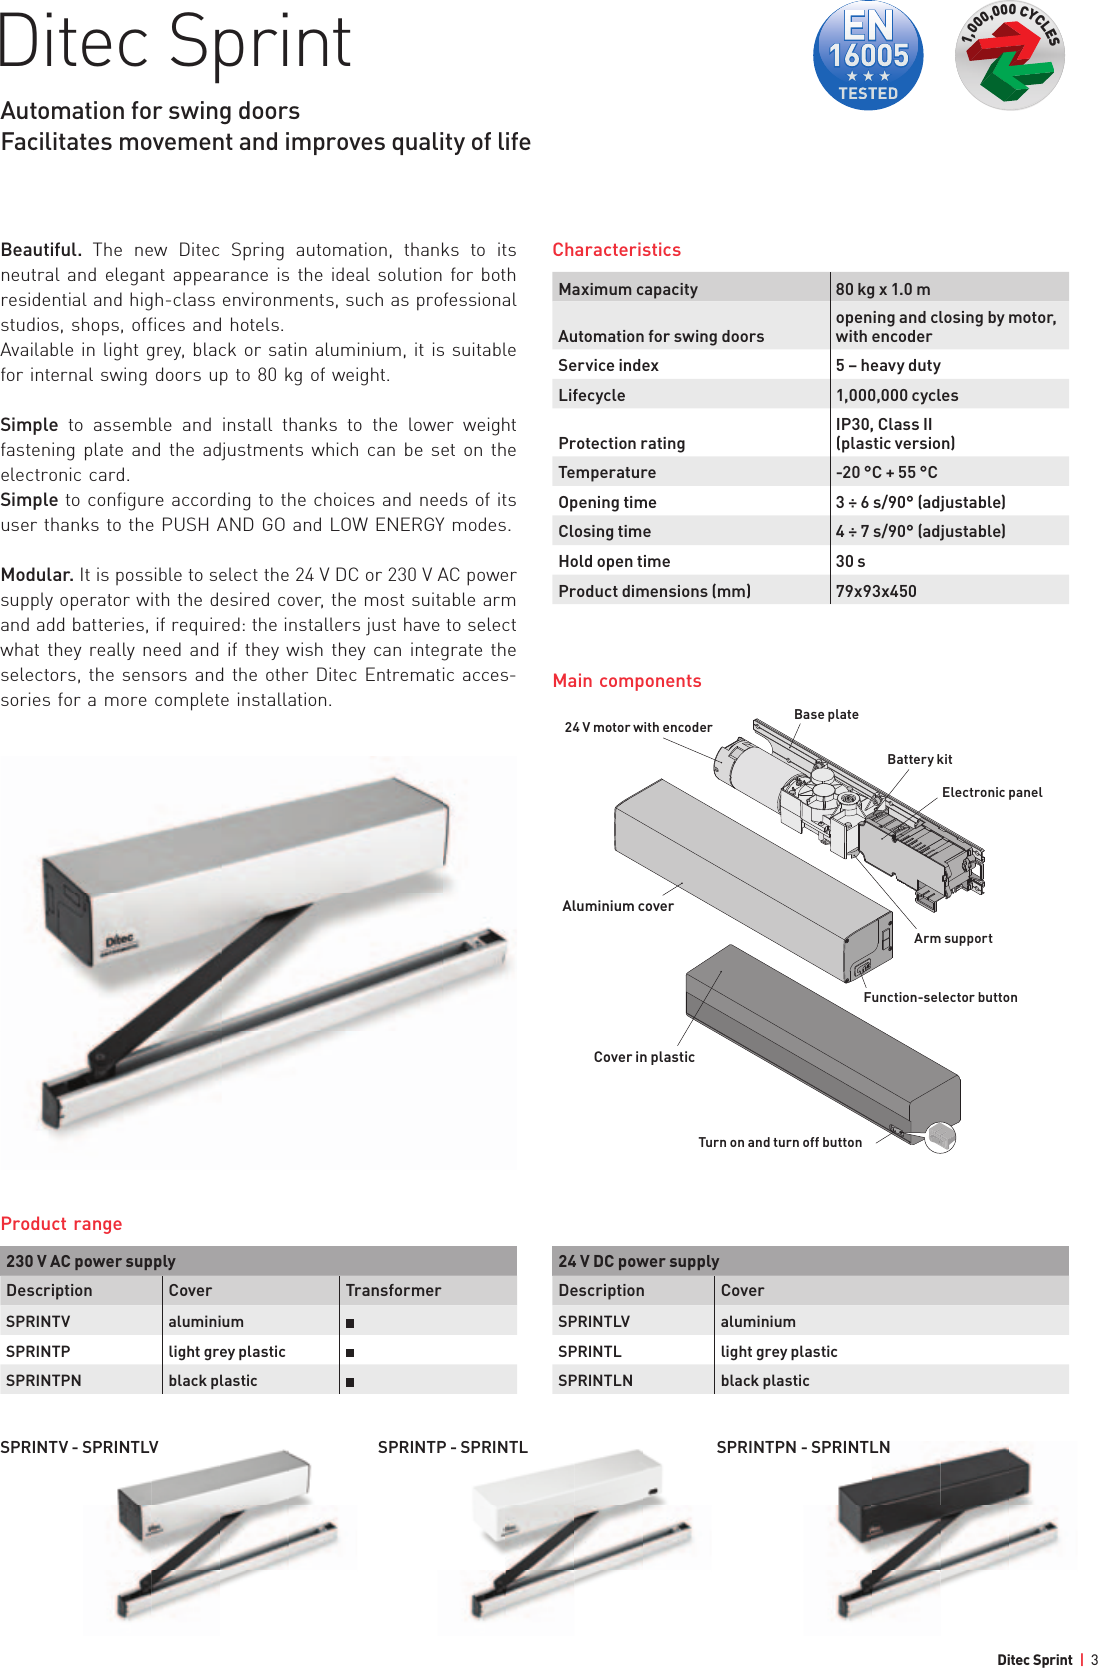 Page 3 of 4 - 147965_DitecSprint_P202B EA - DITEC SPRINT Brochure_EN Brochure EN